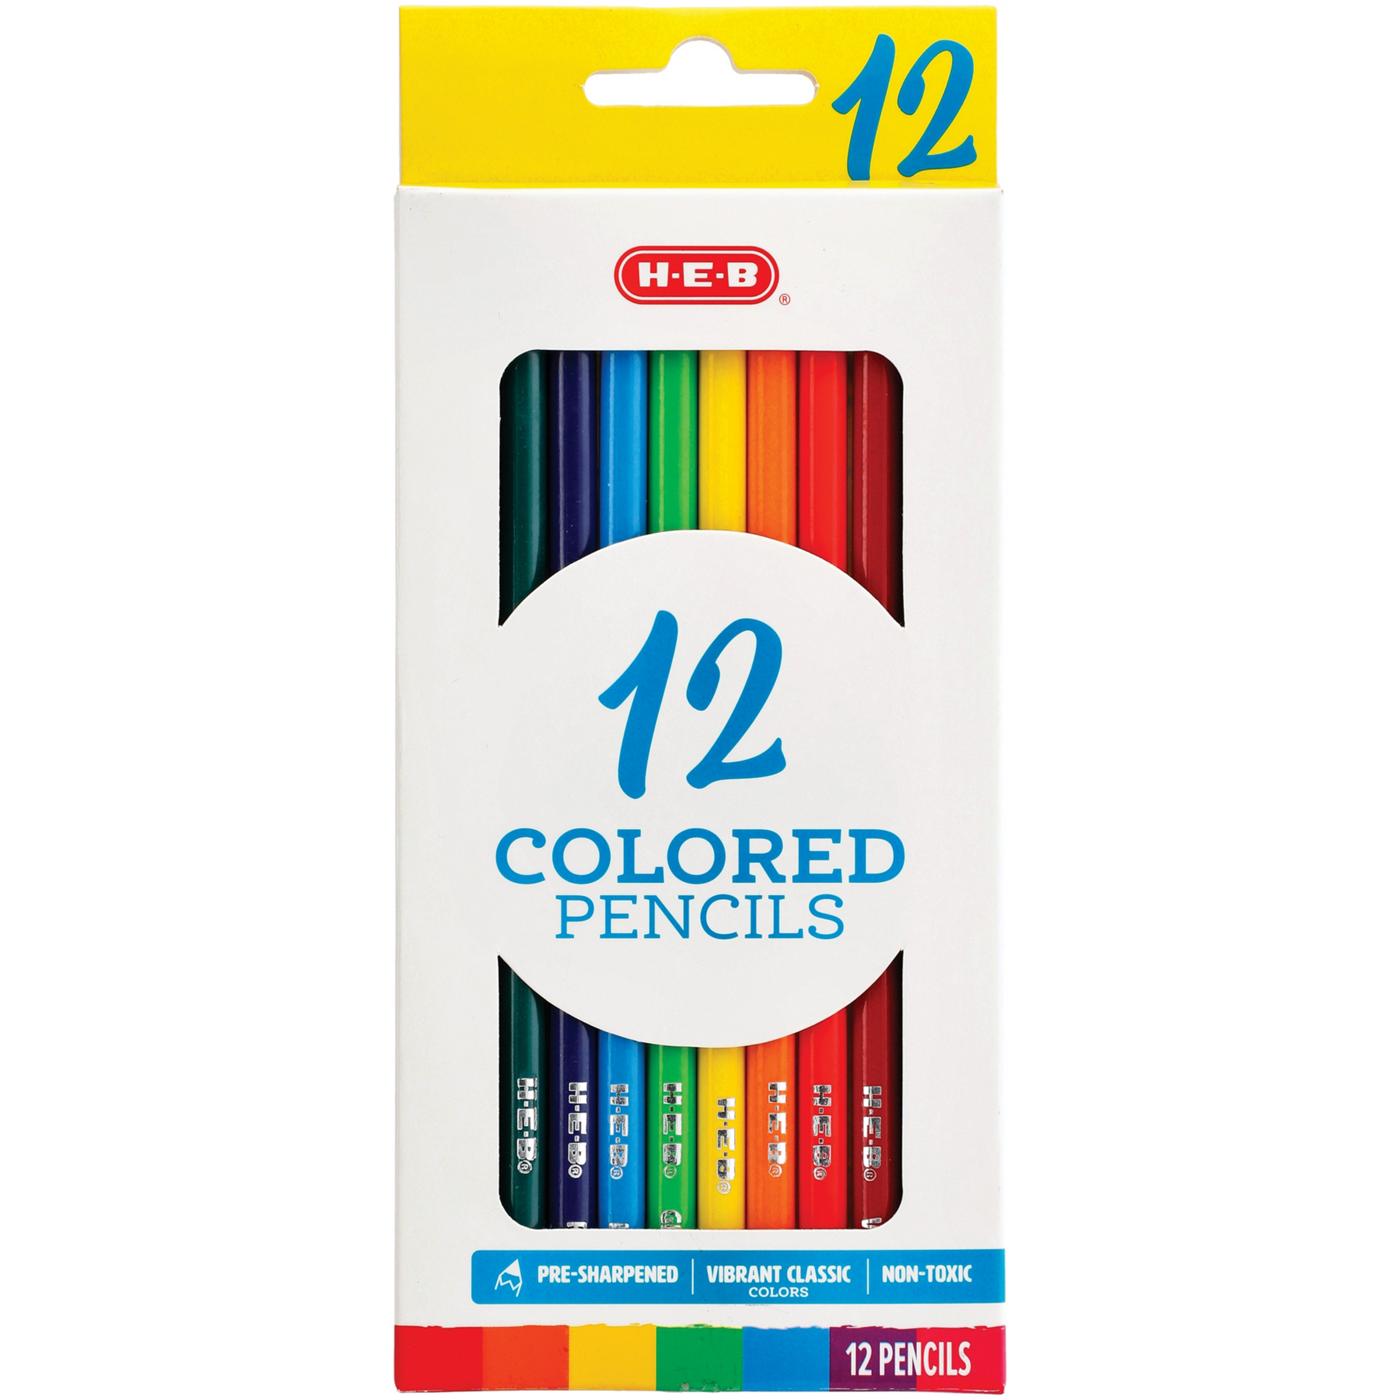 H-E-B Pre-Sharpened Colored Pencils; image 1 of 2